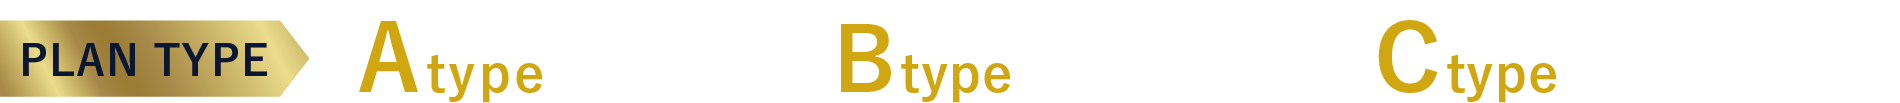 PLAN TYPE Atype 最終1邸／Btype 残り4邸／Ctype 残り2邸